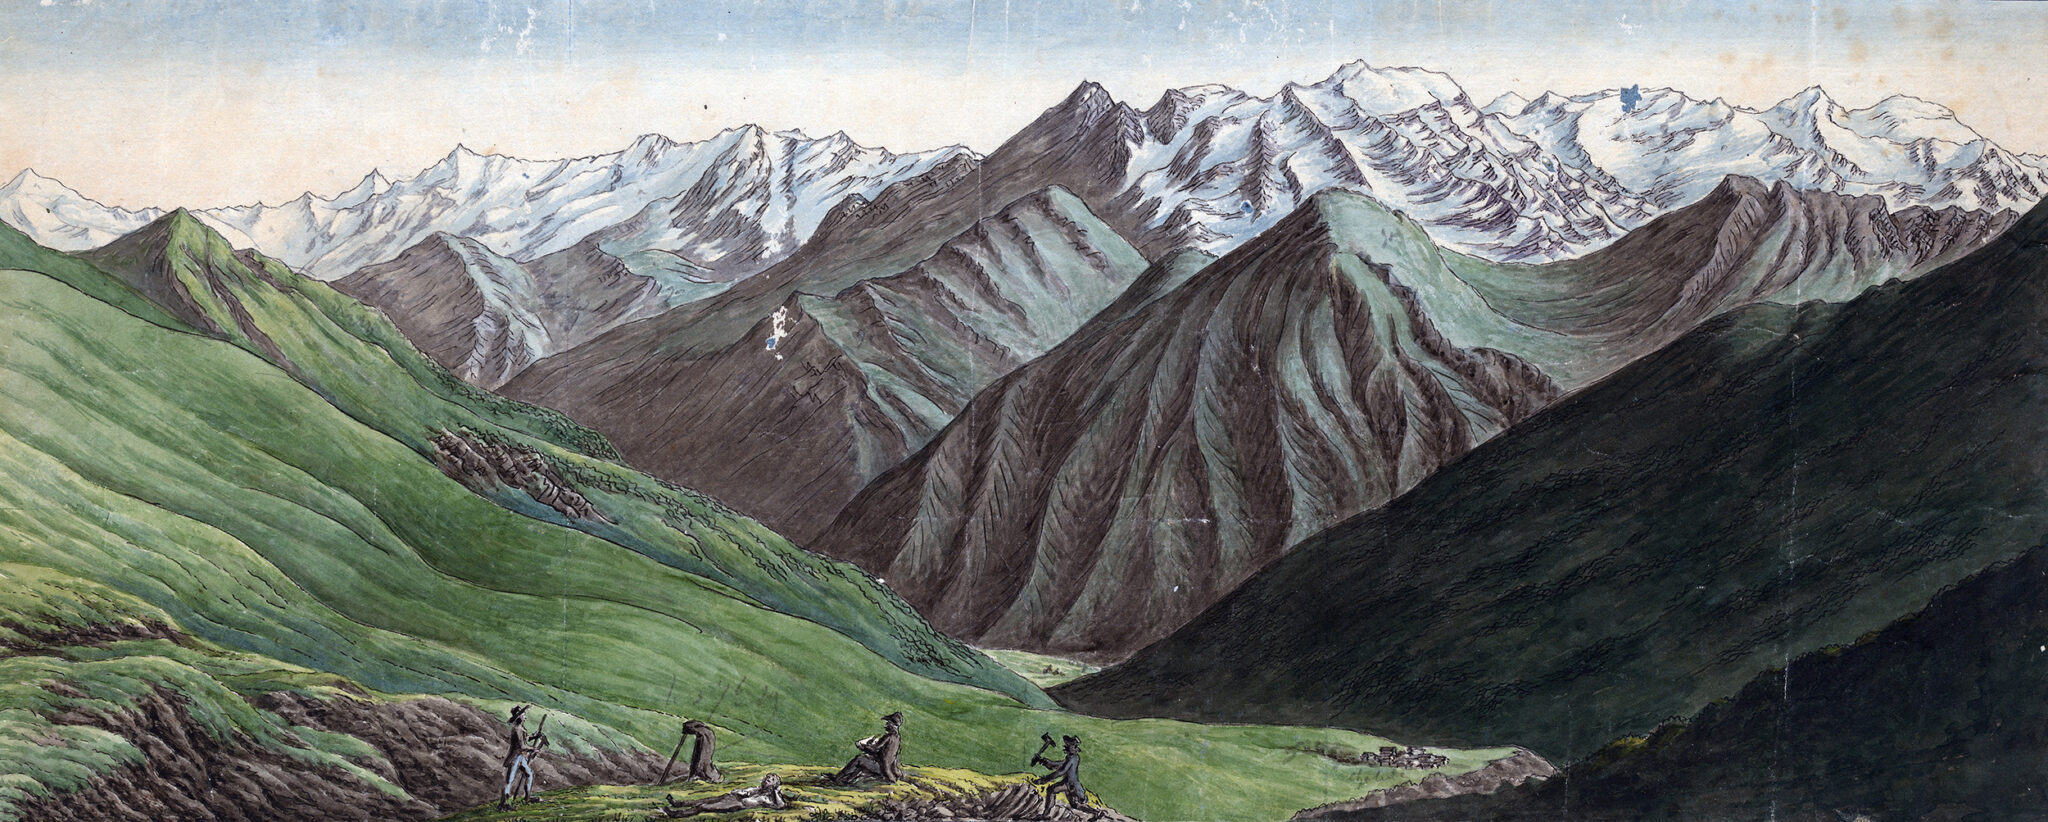 Imagen alpina